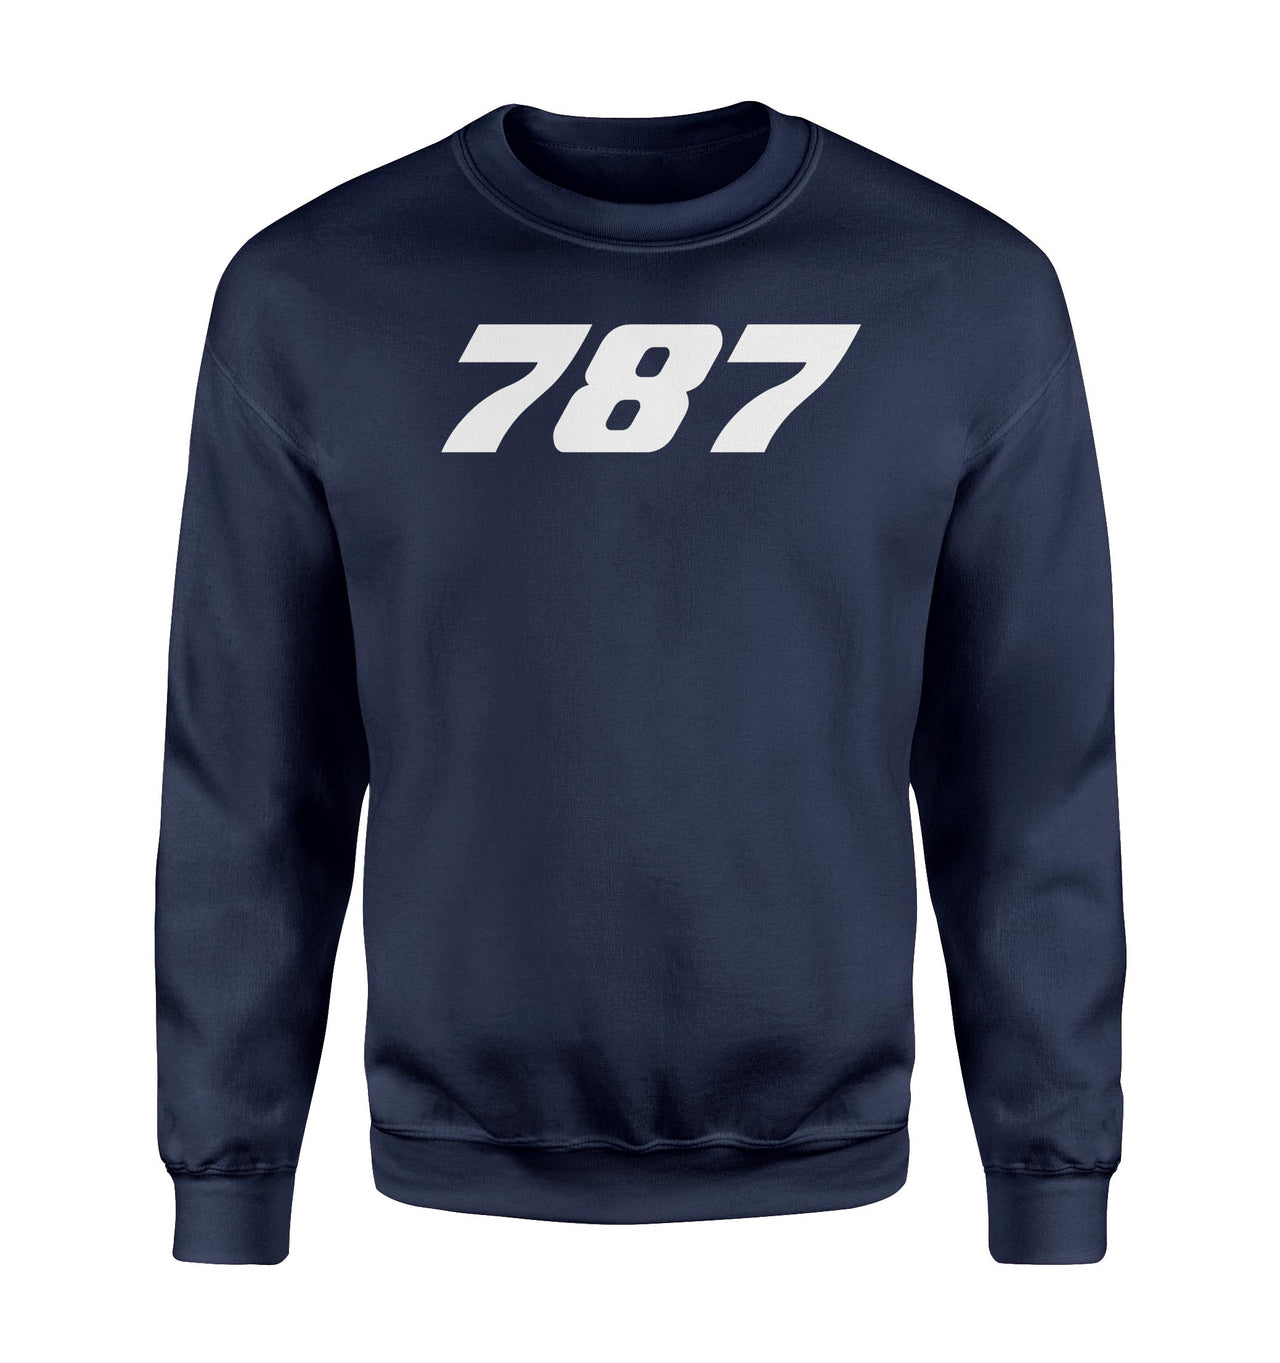 787 Flat Text Designed Sweatshirts